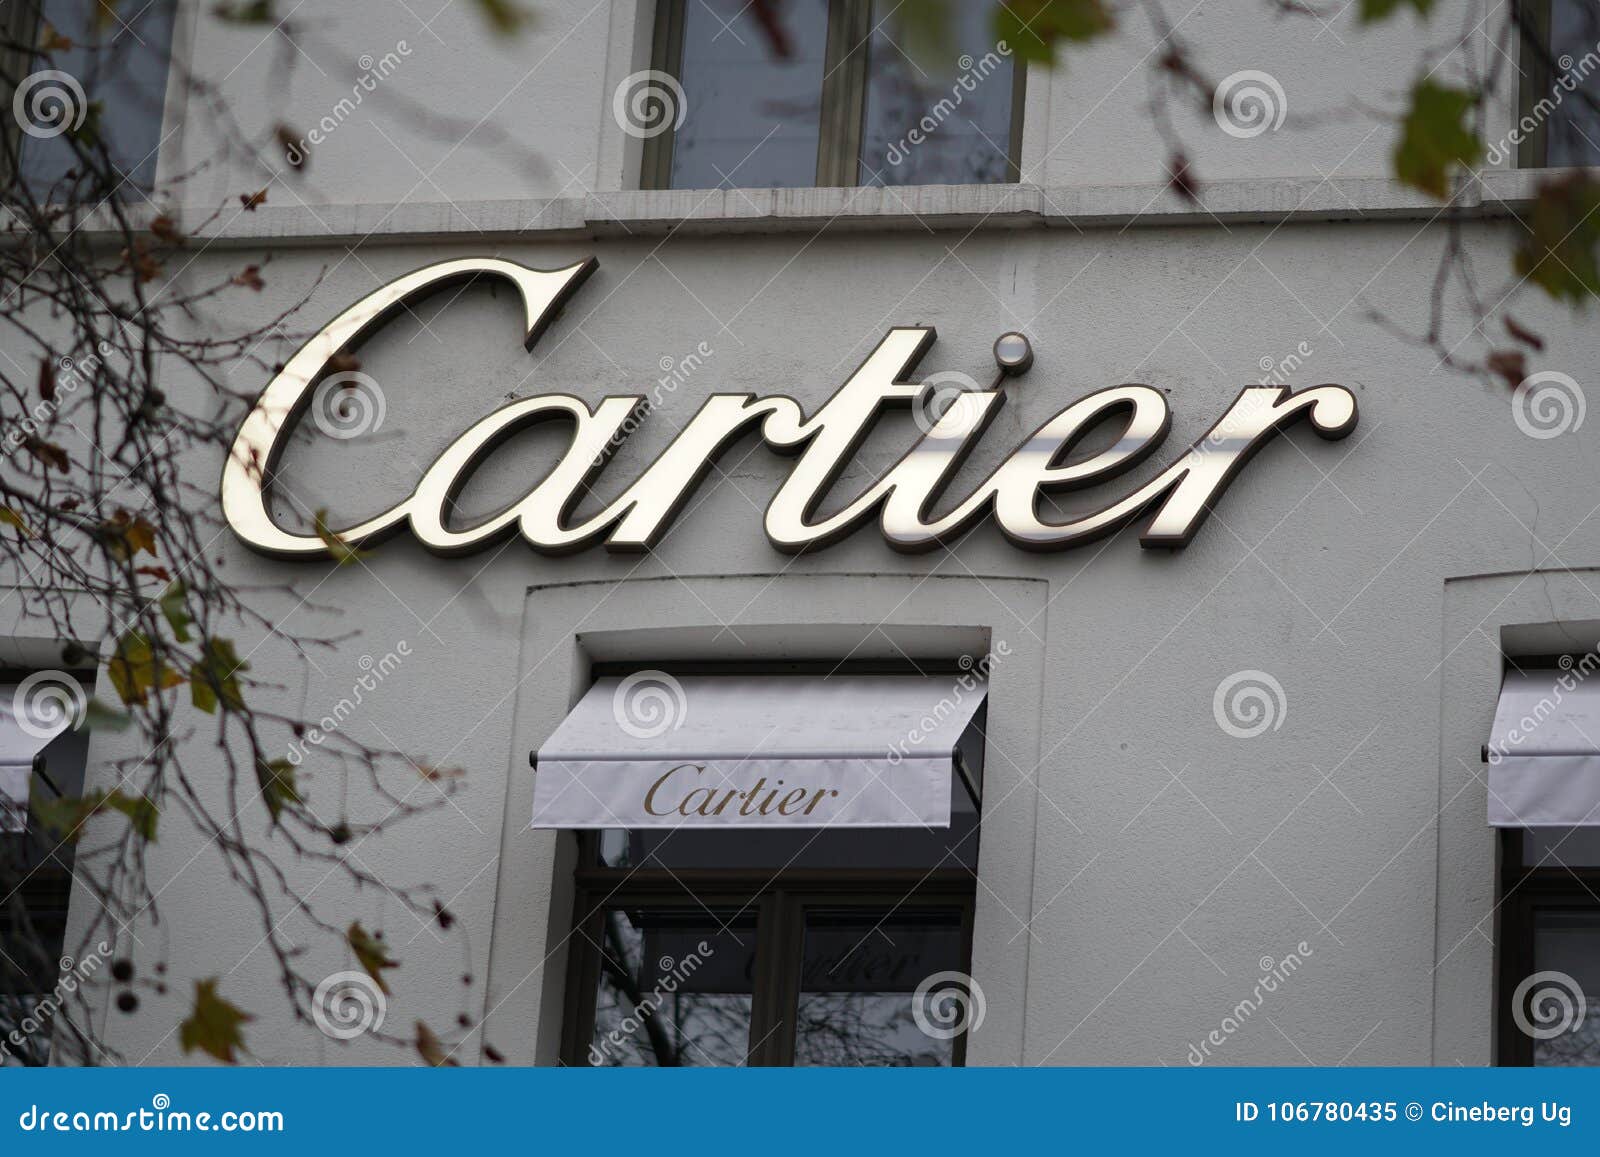 cartier company